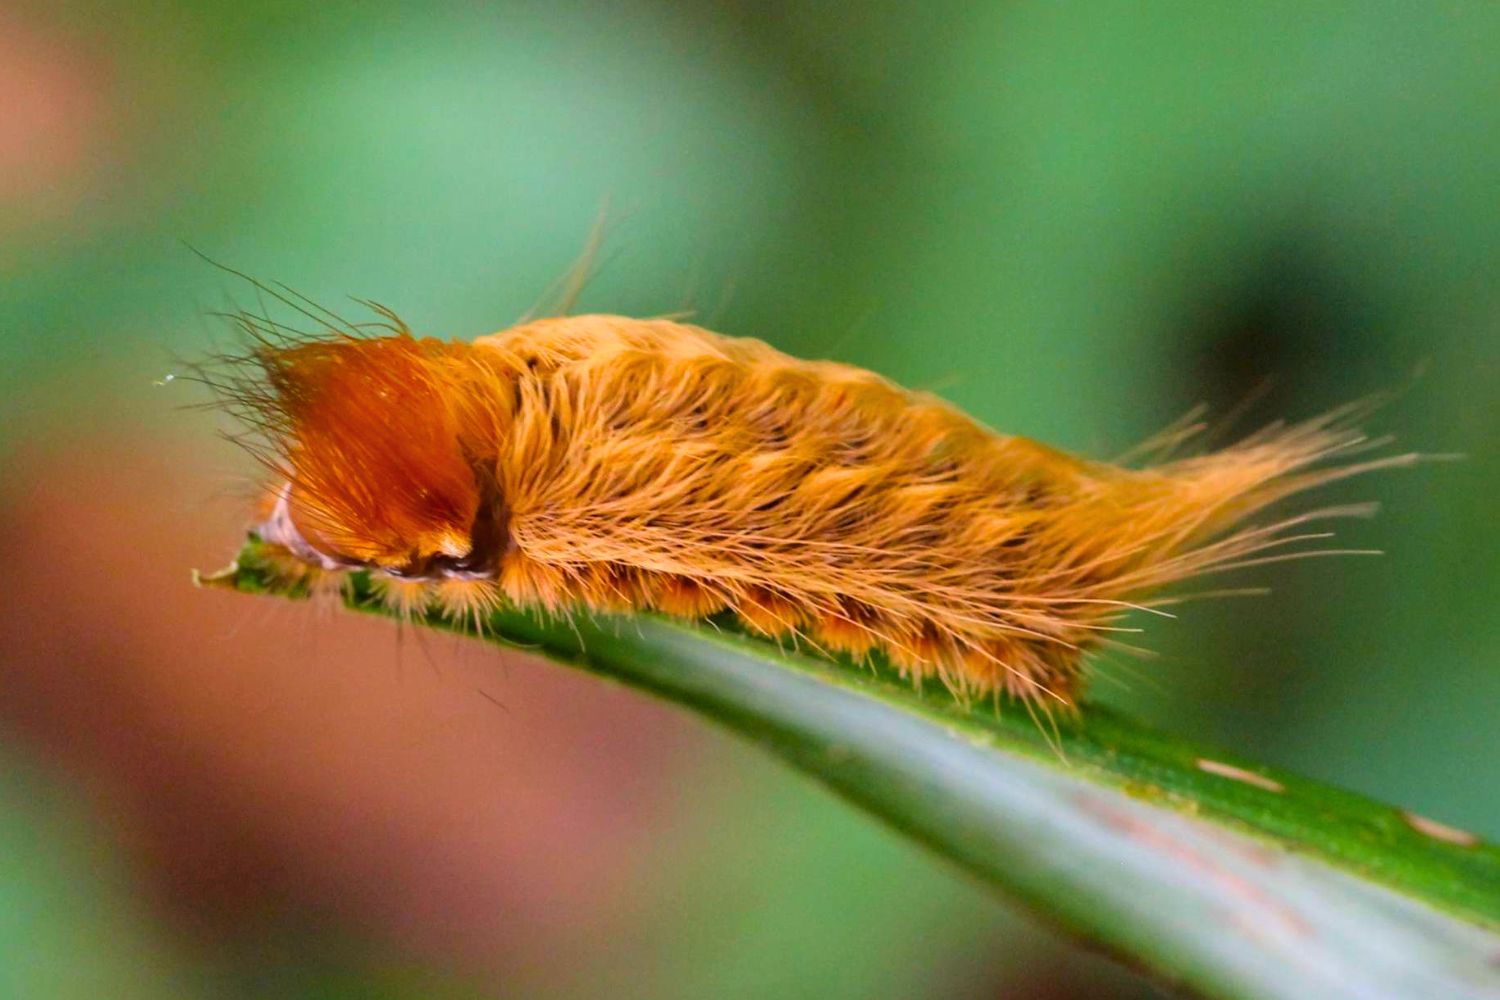 3. Flannel Moth Caterpillar